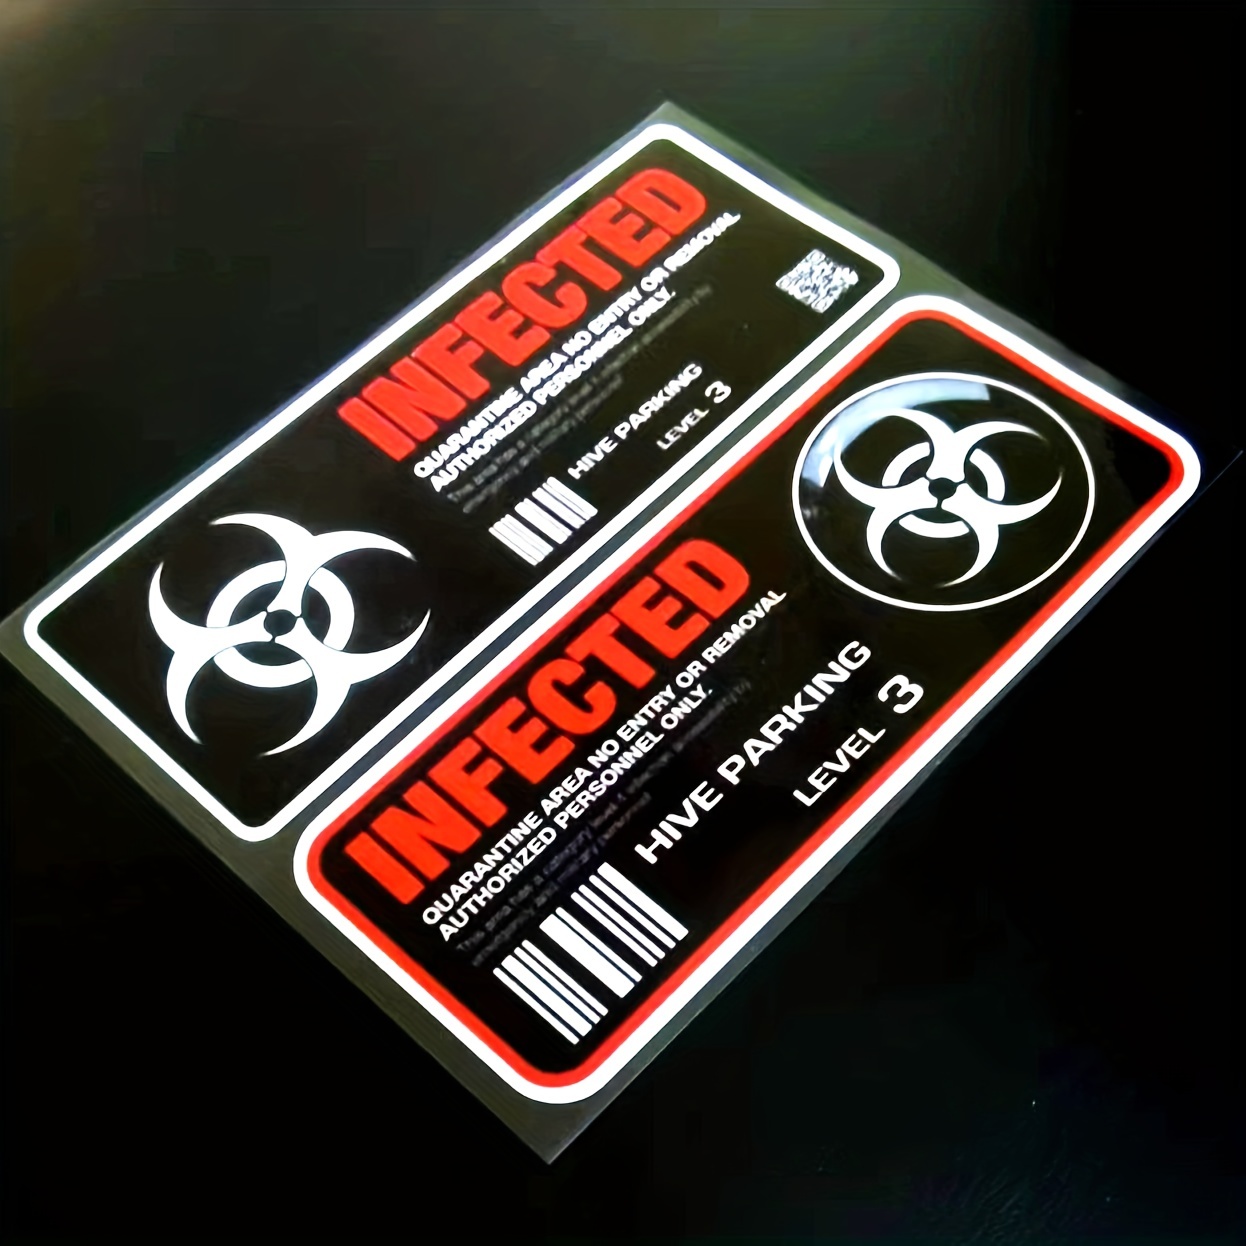 Umbrella Corporation Hive Parking Level 3 Resident Evil Vinyl Decal Sticker  PAIR